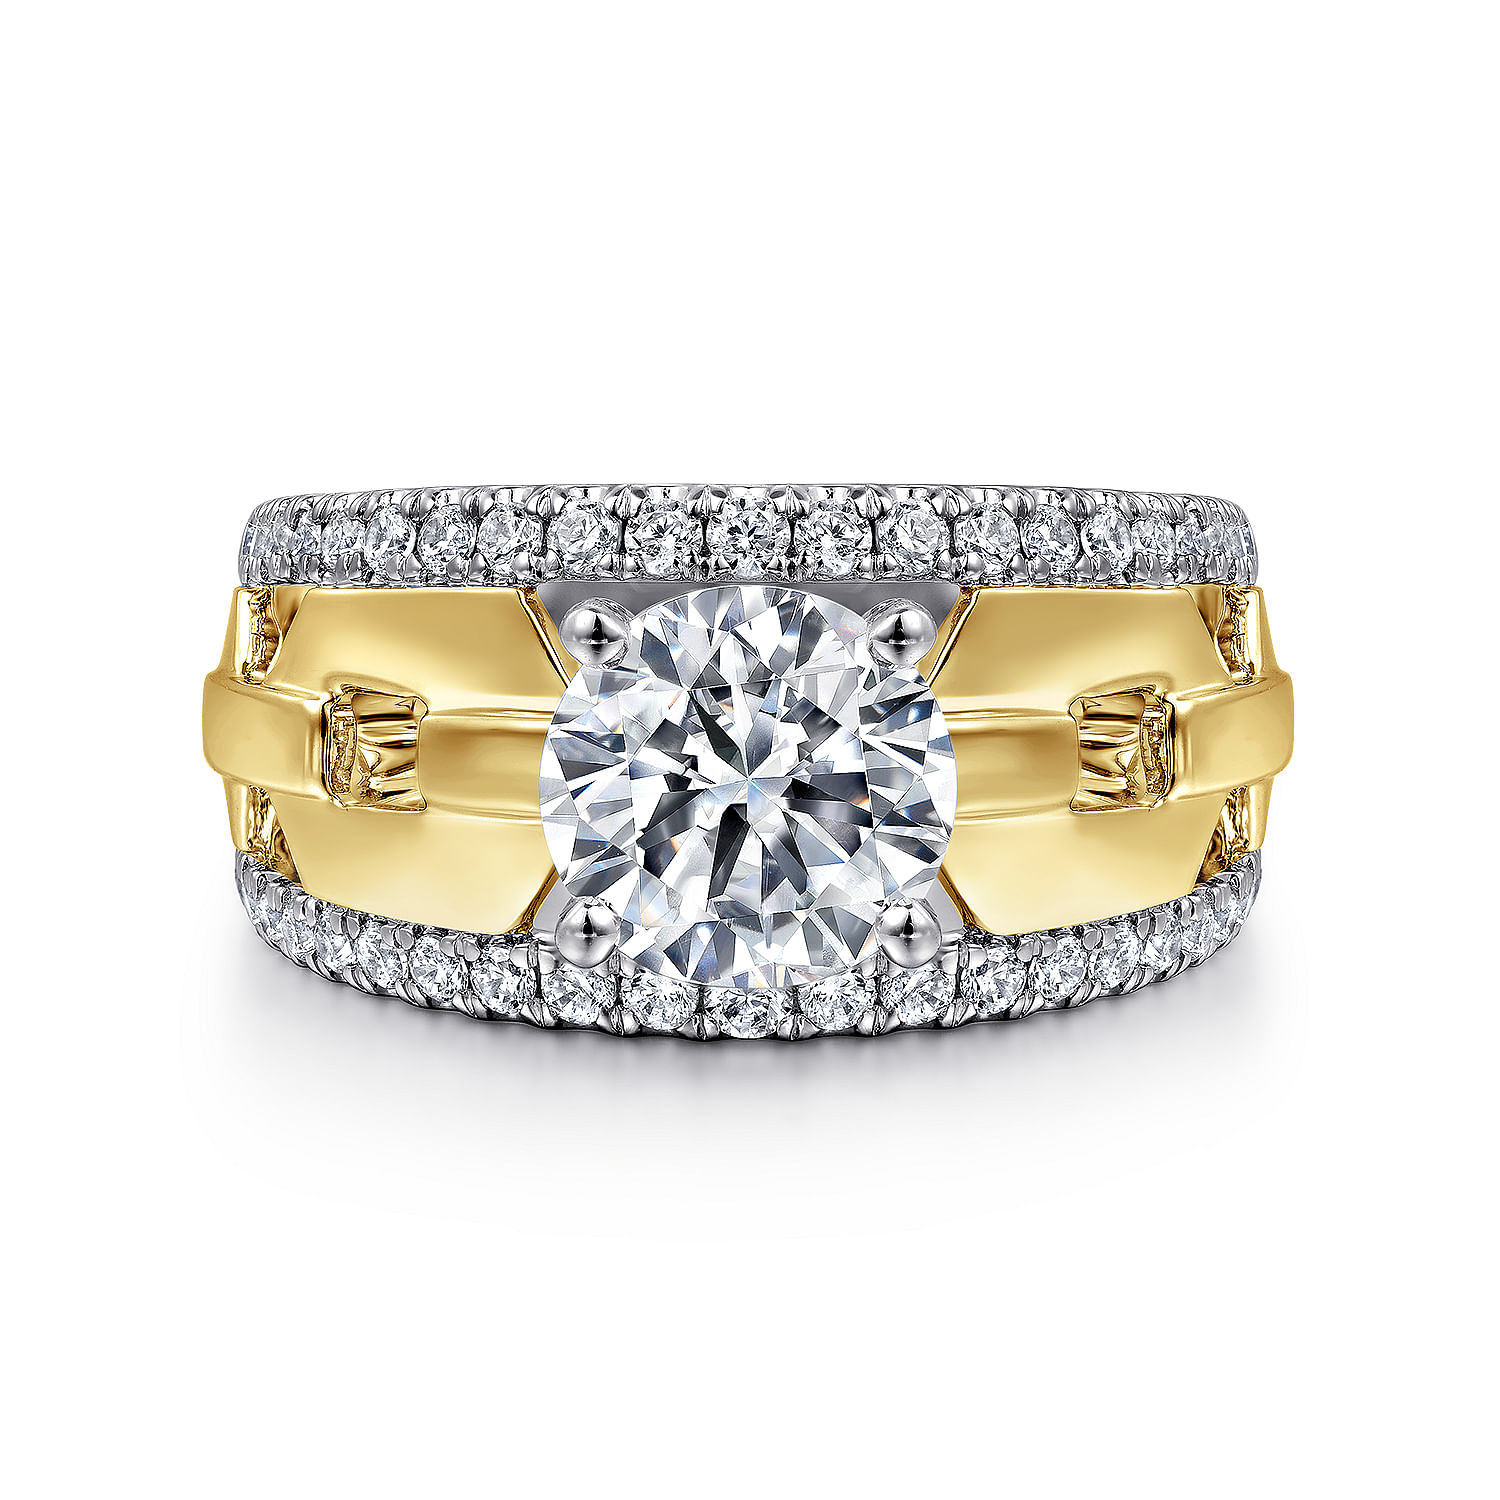 14K White &Yellow Gold Wide Band Round Diamond Engagement Ring